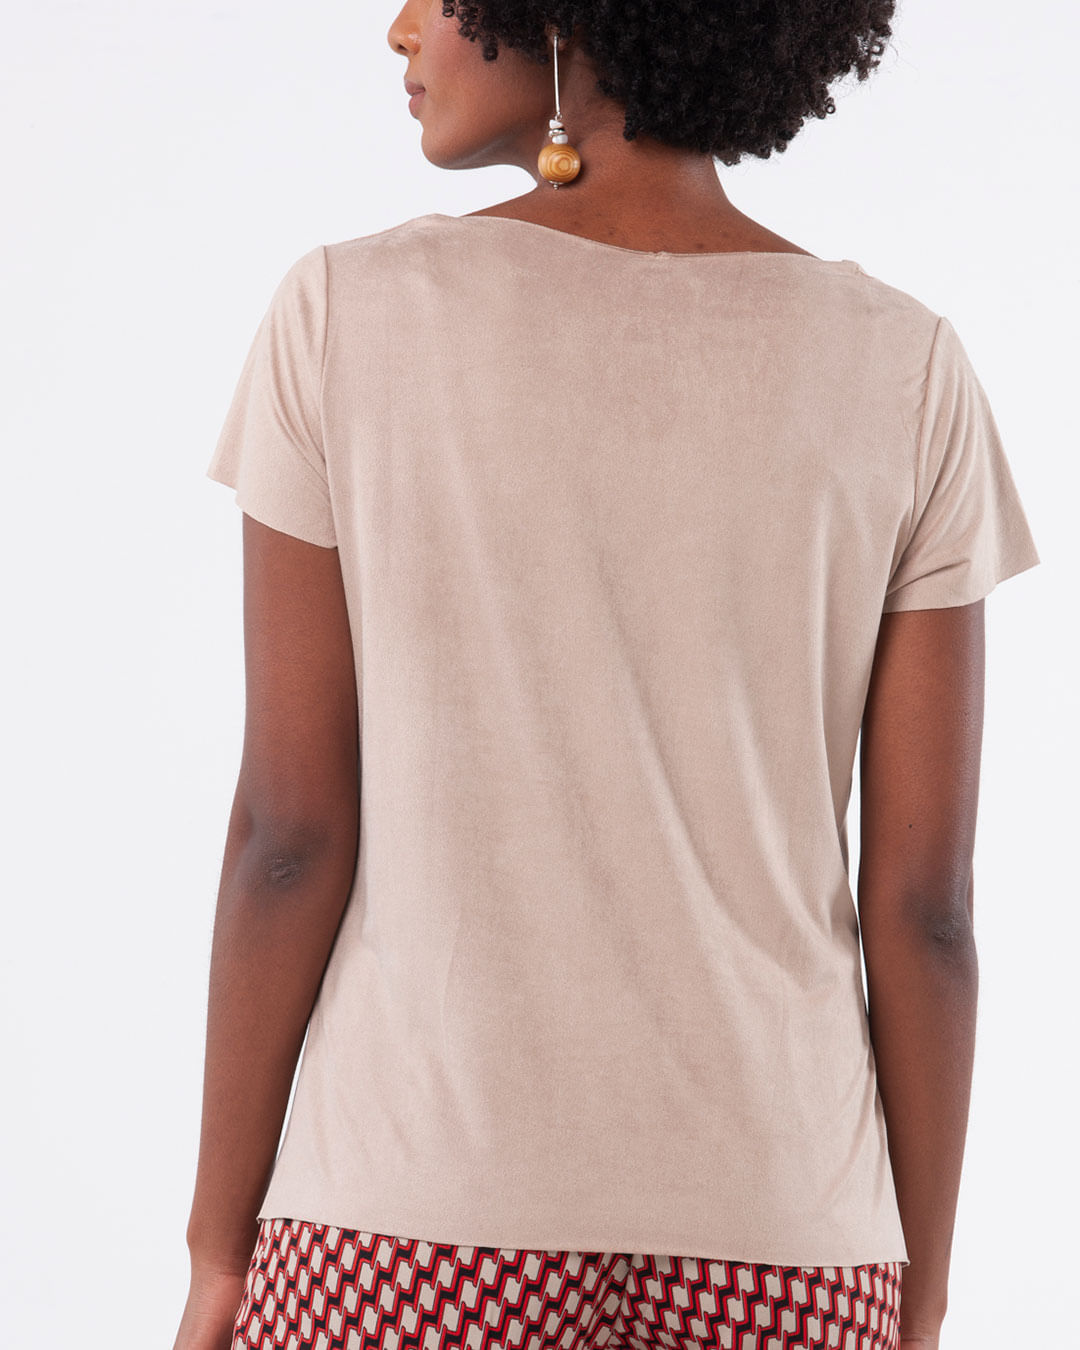 Camiseta-Feminina-Suede-Amarracao-Bege